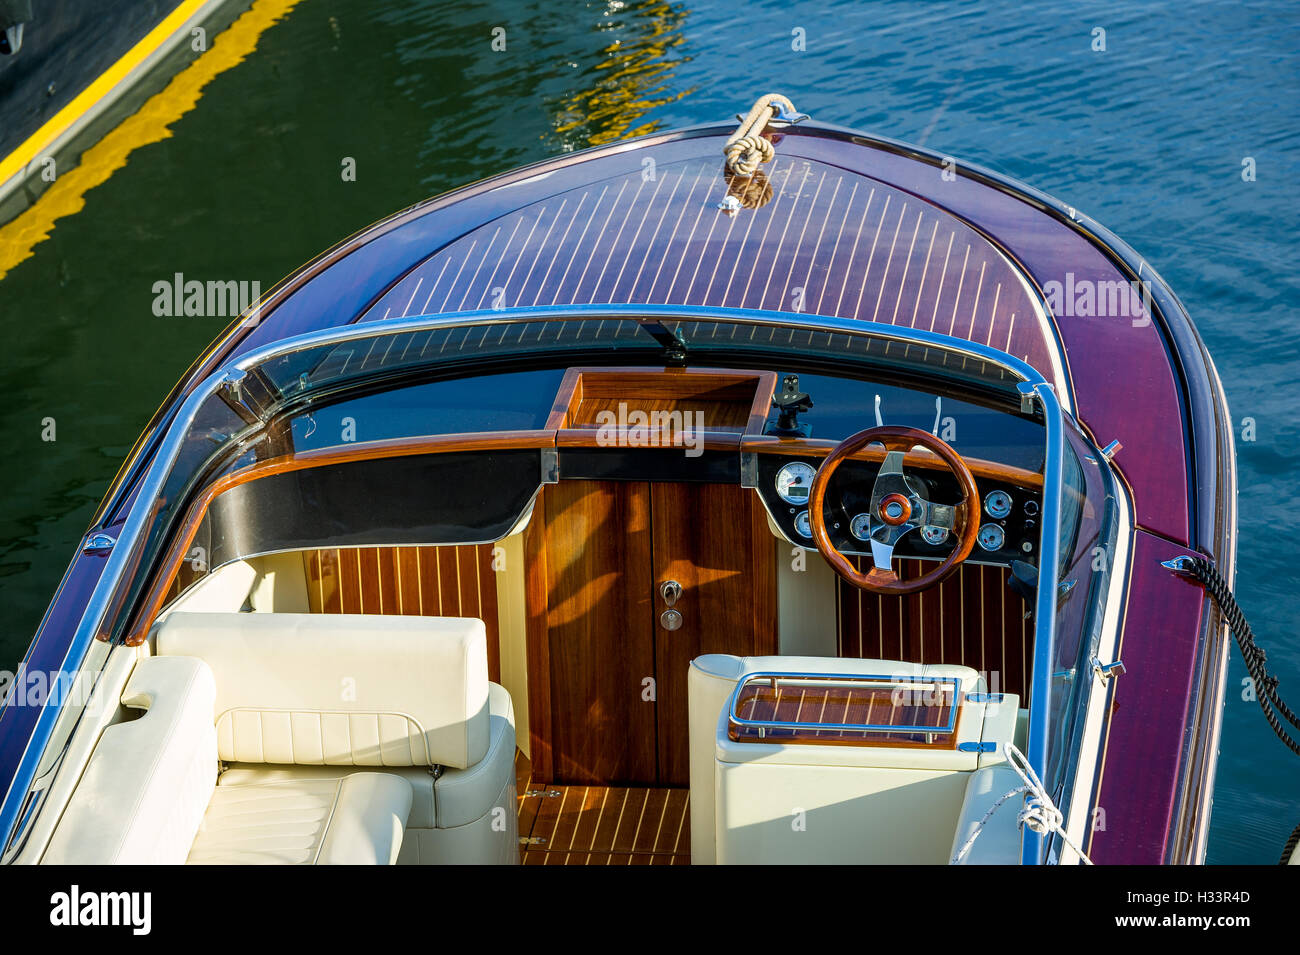 Luxury retro style wooden motor boat Stock Photo